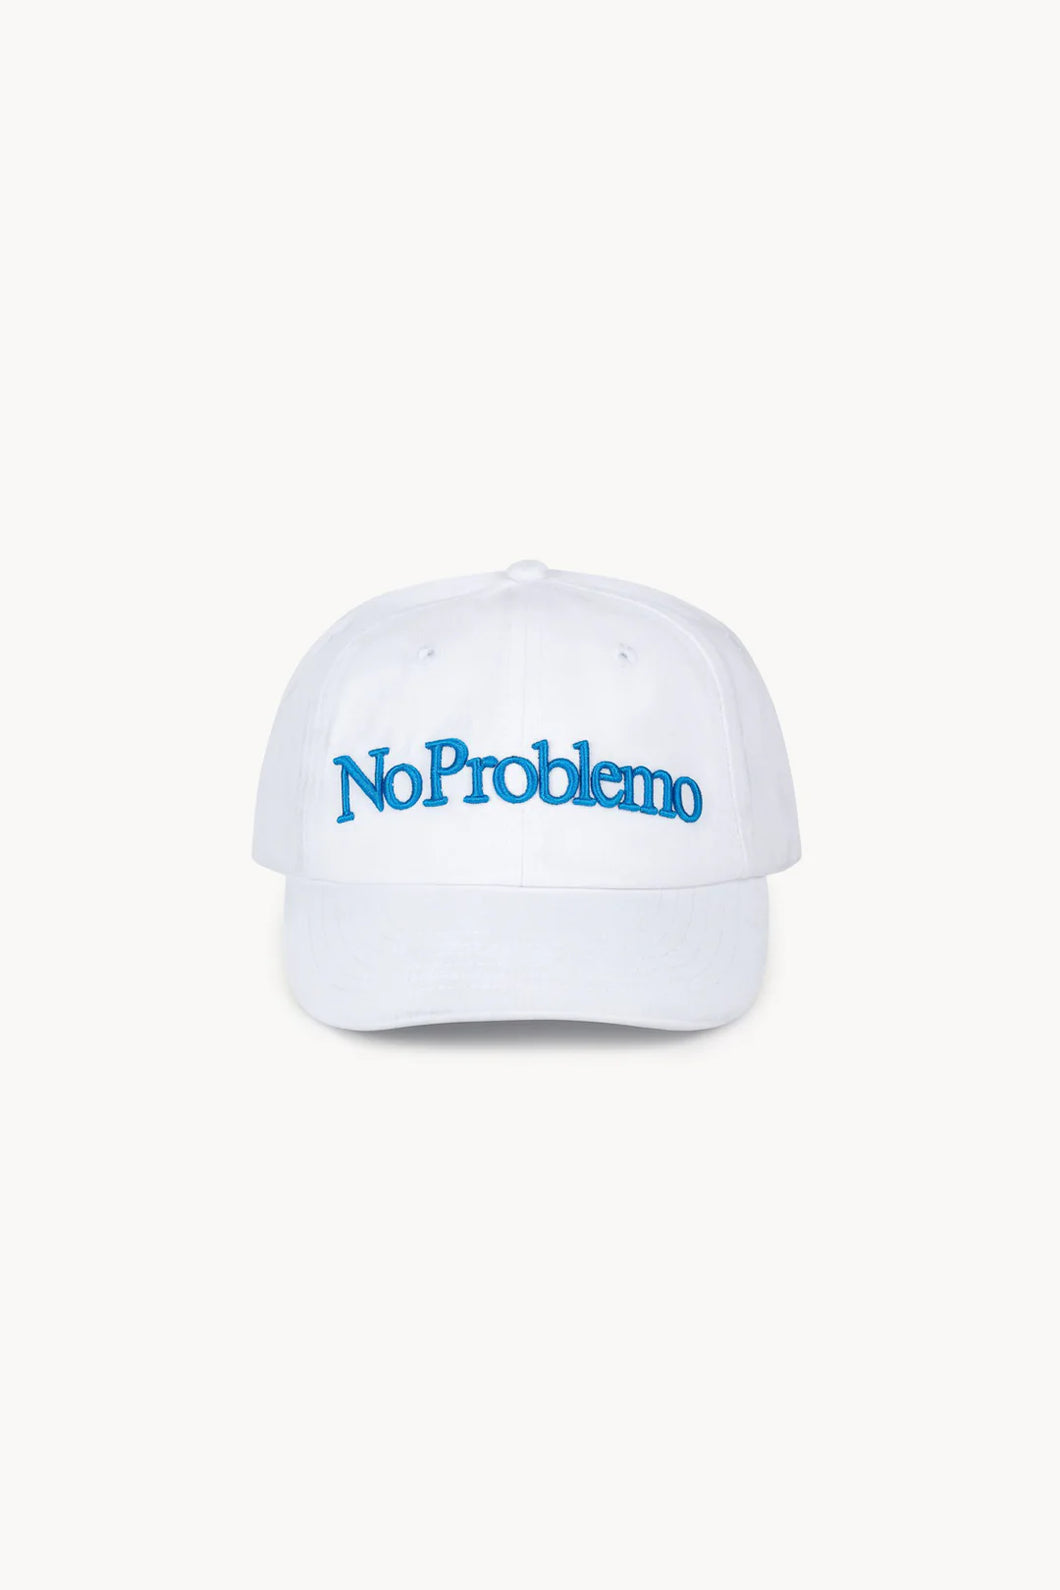 NO PROBLEMO CAP - WHITE